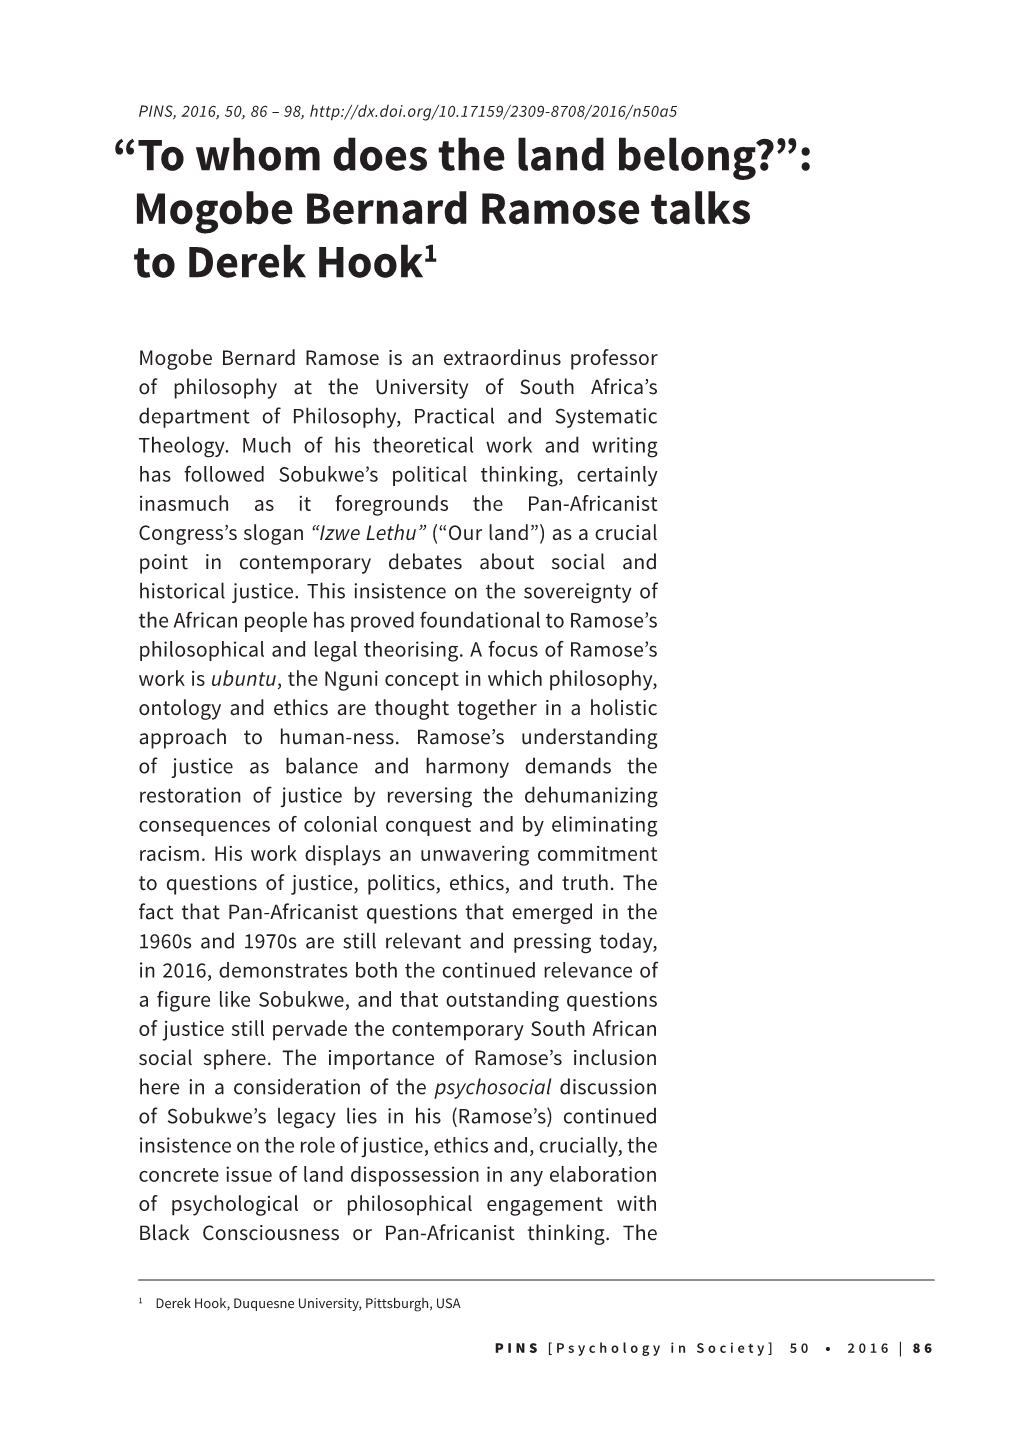 “To Whom Does the Land Belong?”: Mogobe Bernard Ramose Talks to Derek Hook1